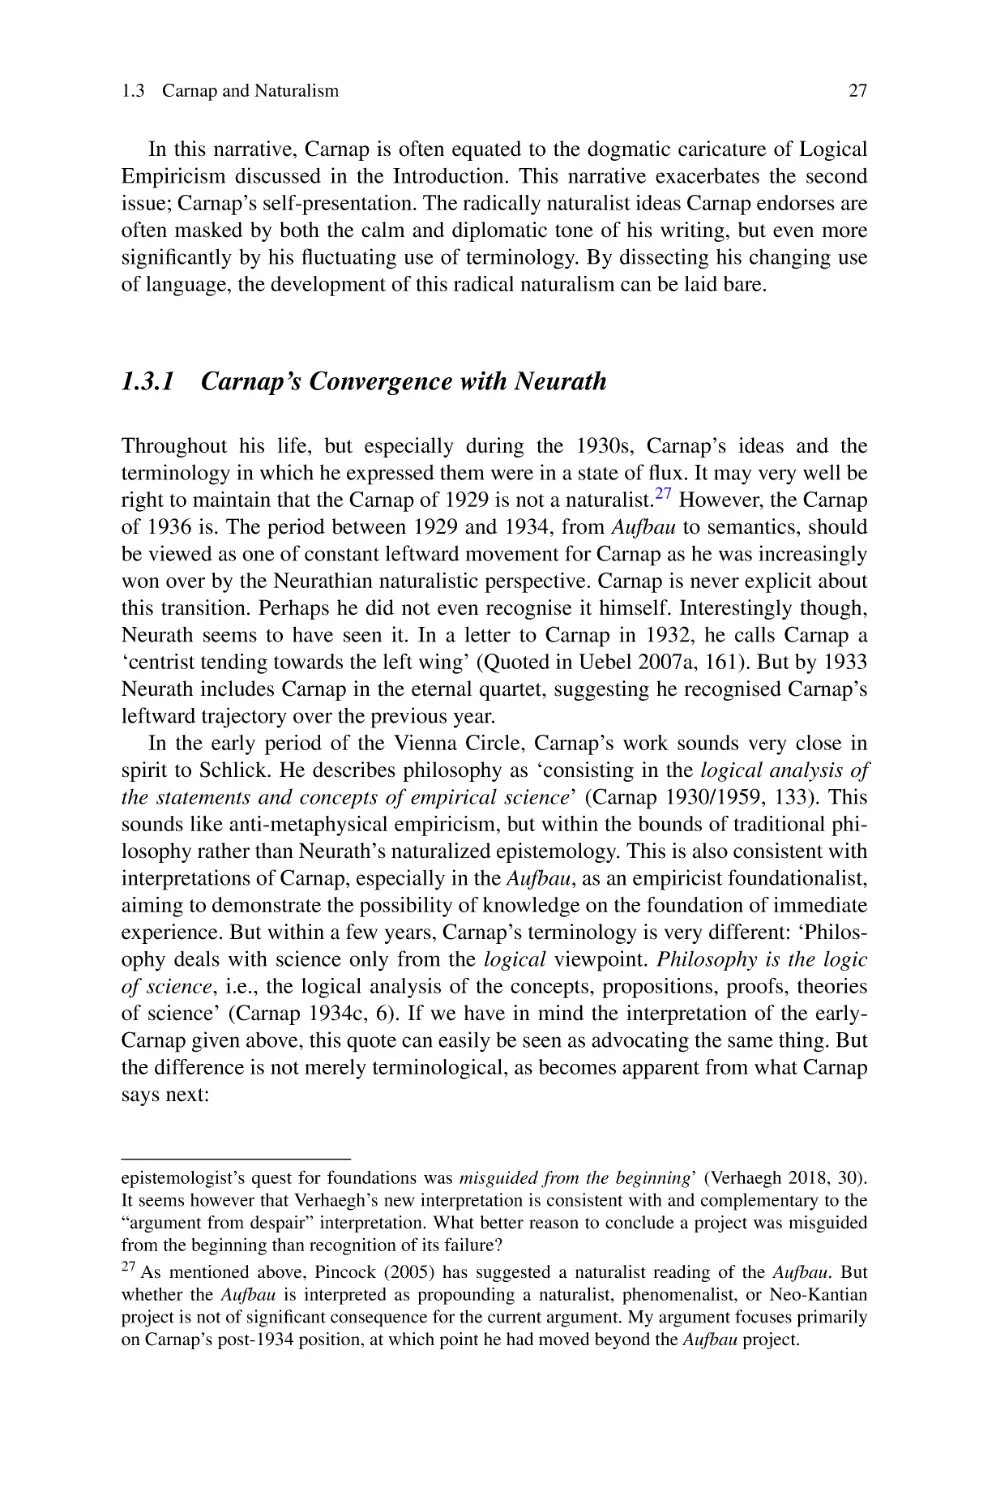 1.3.1 Carnap's Convergence with Neurath